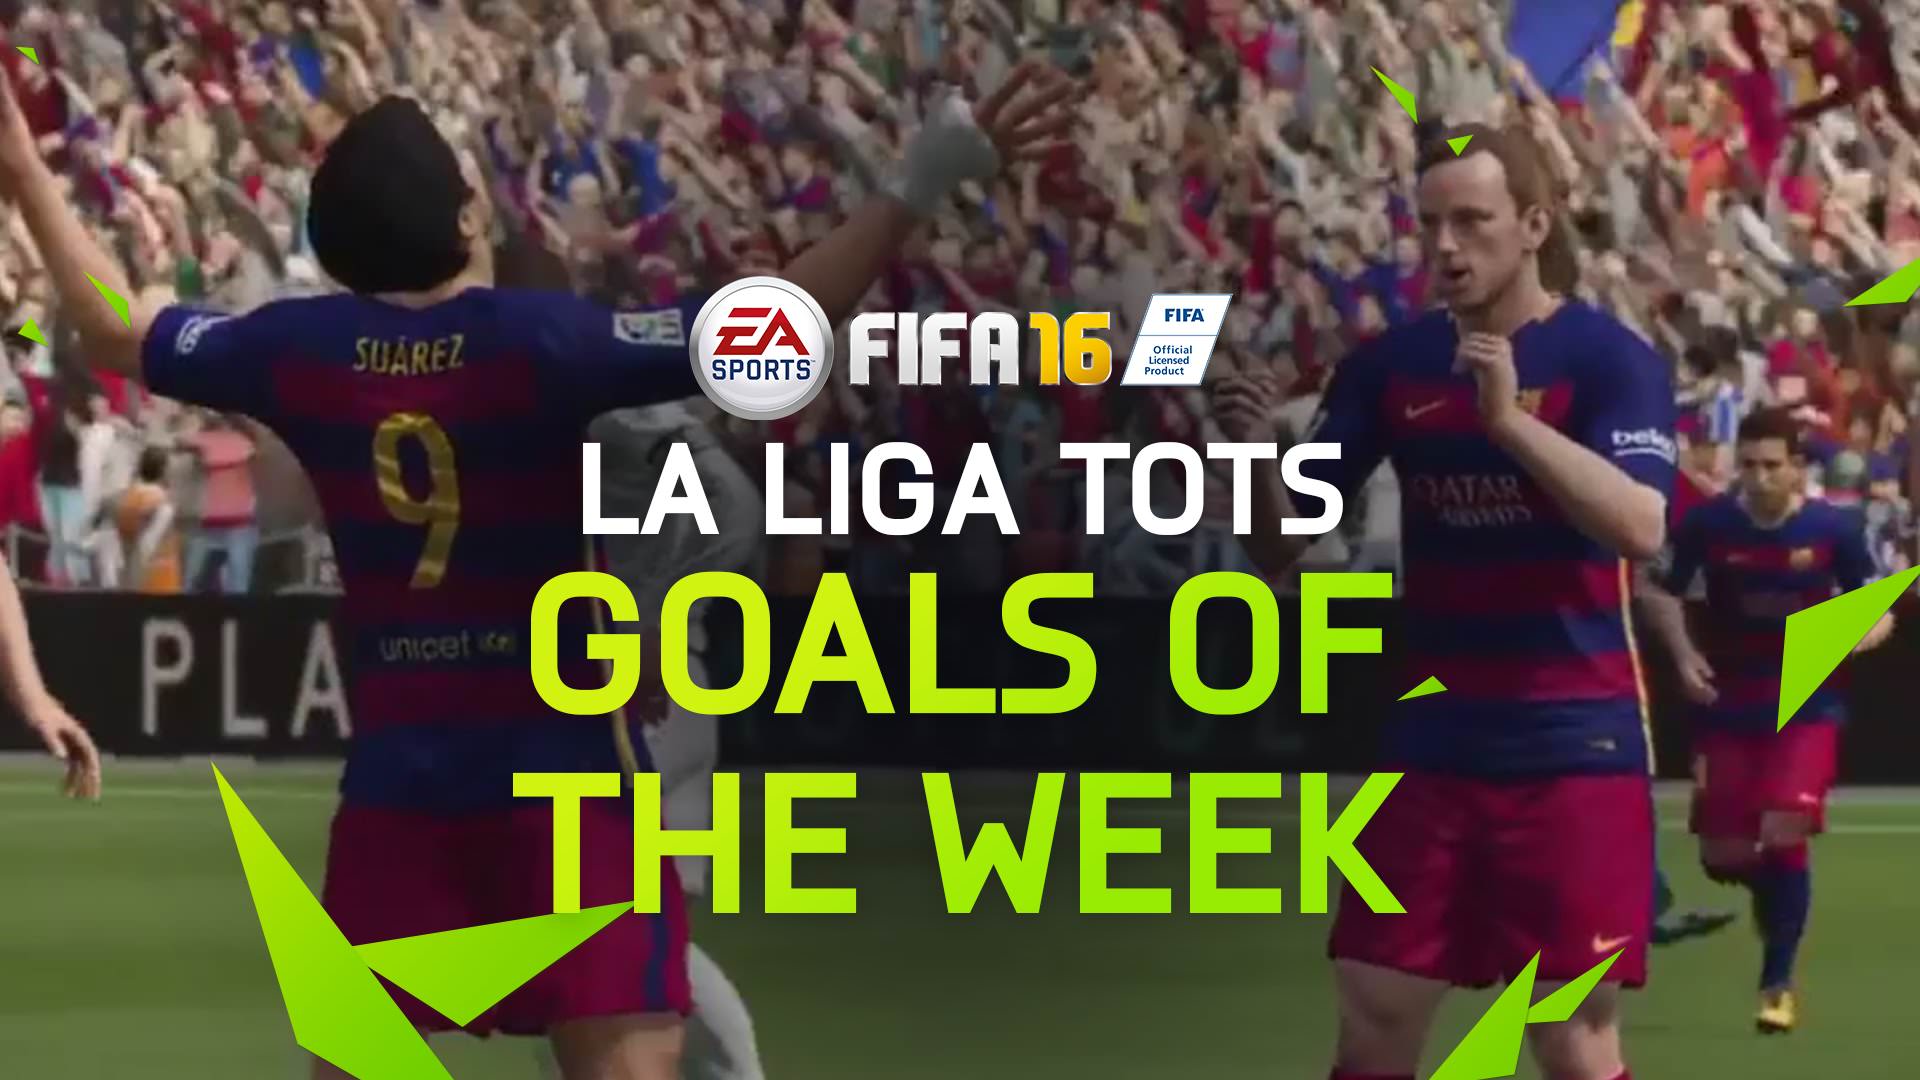 FIFA 16 Goals of the Week - La Liga Team of the Season